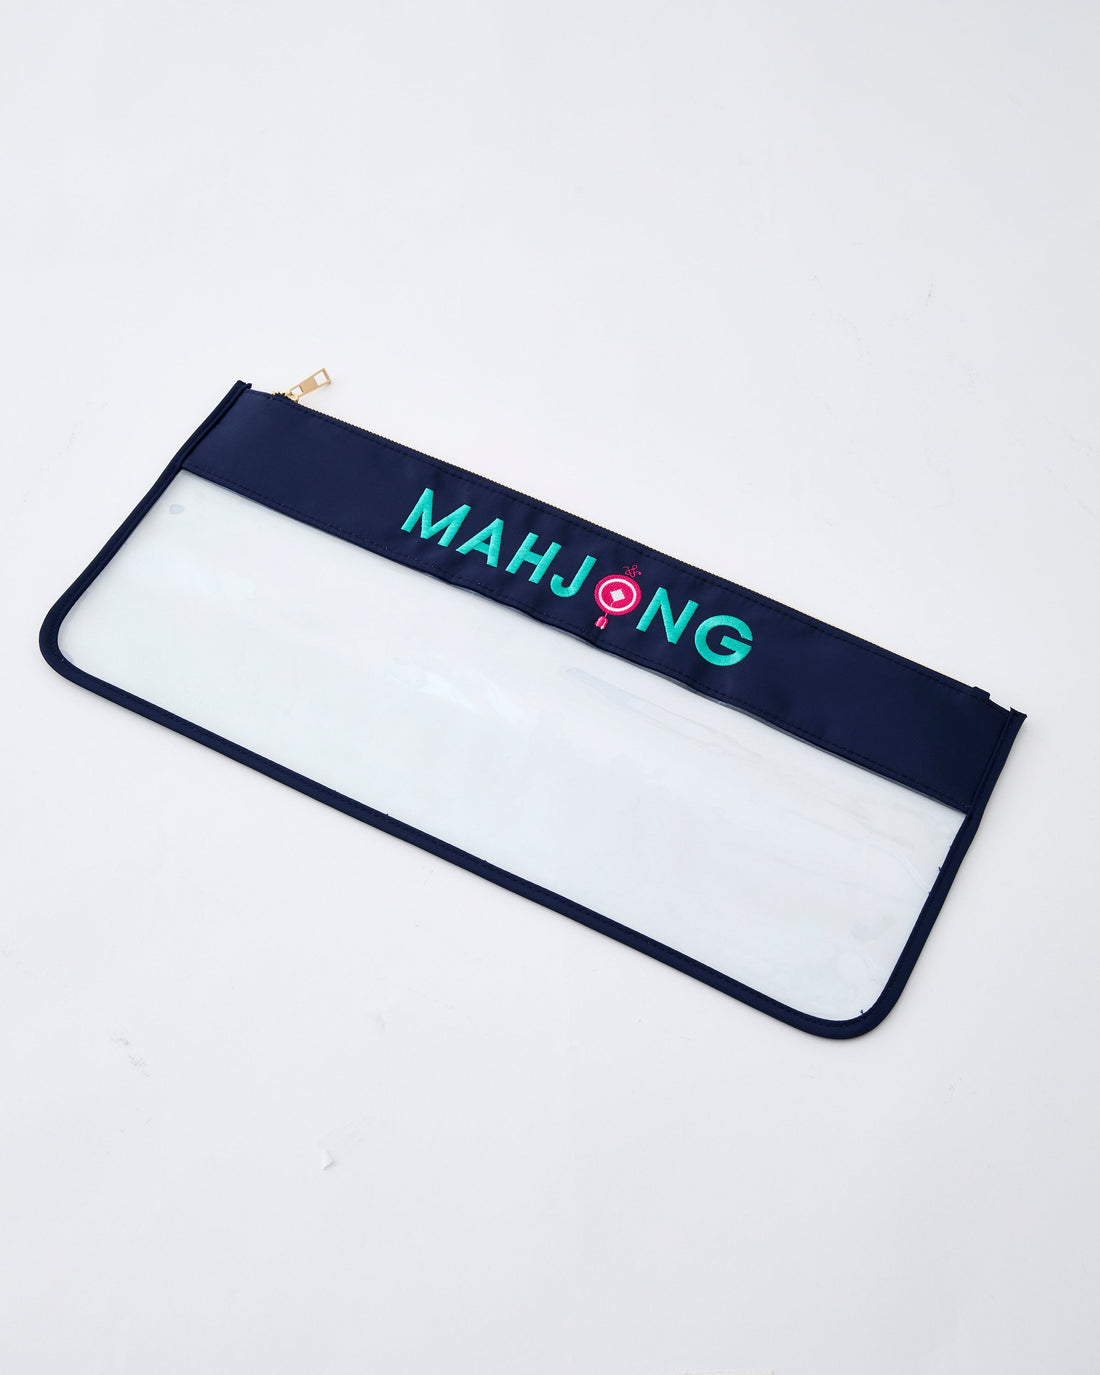 Navy Stitched Mahjong Bag - Oh My Mahjong